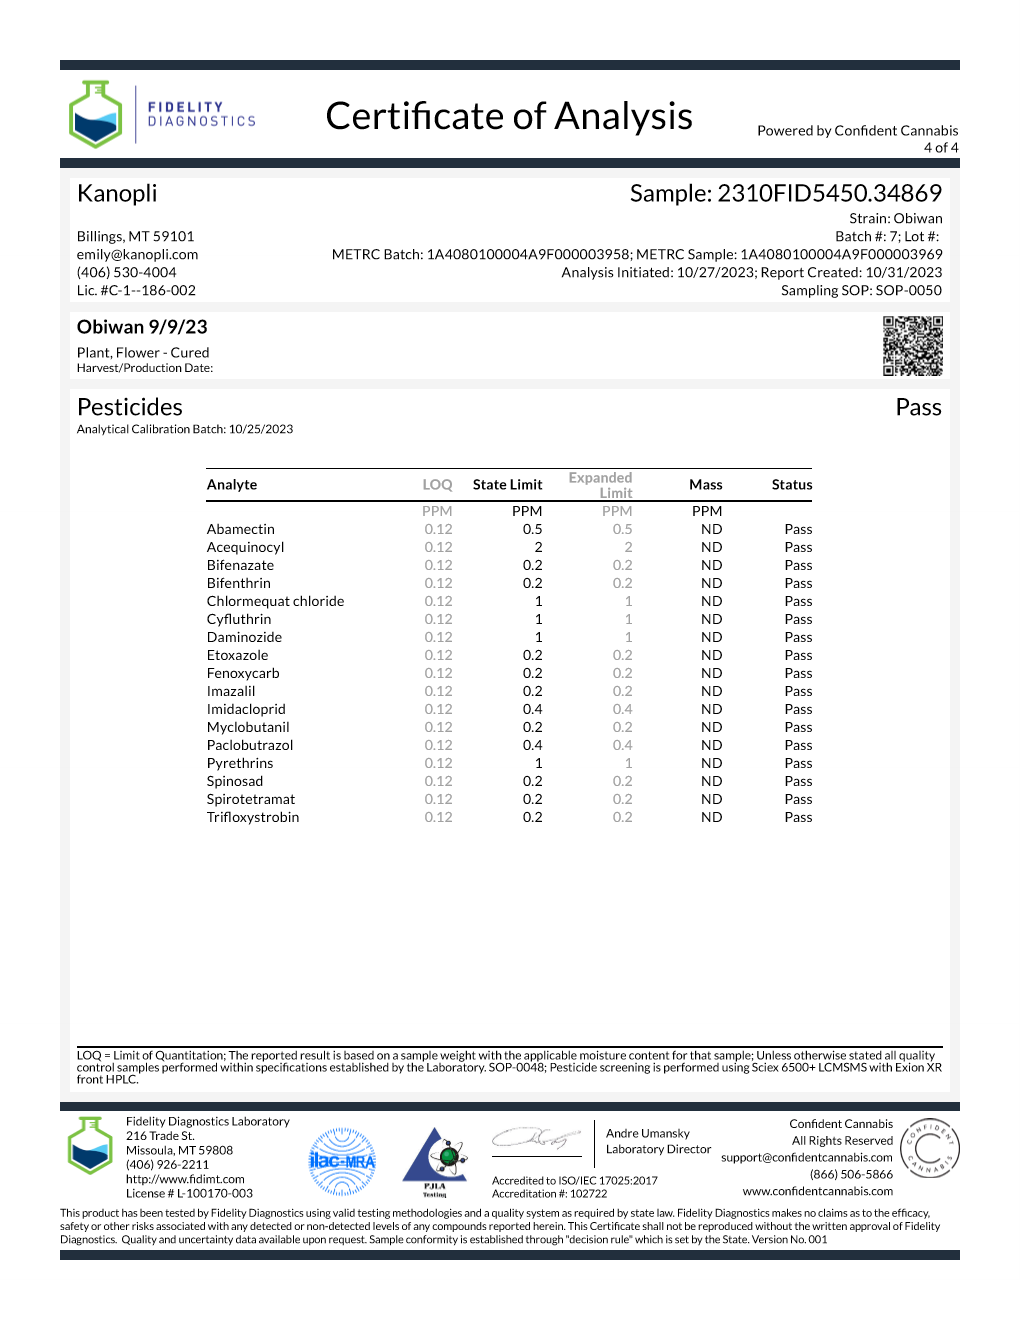 Obiwan - Indica shake (26.21% THC) Sept. 2023 (5 grams)